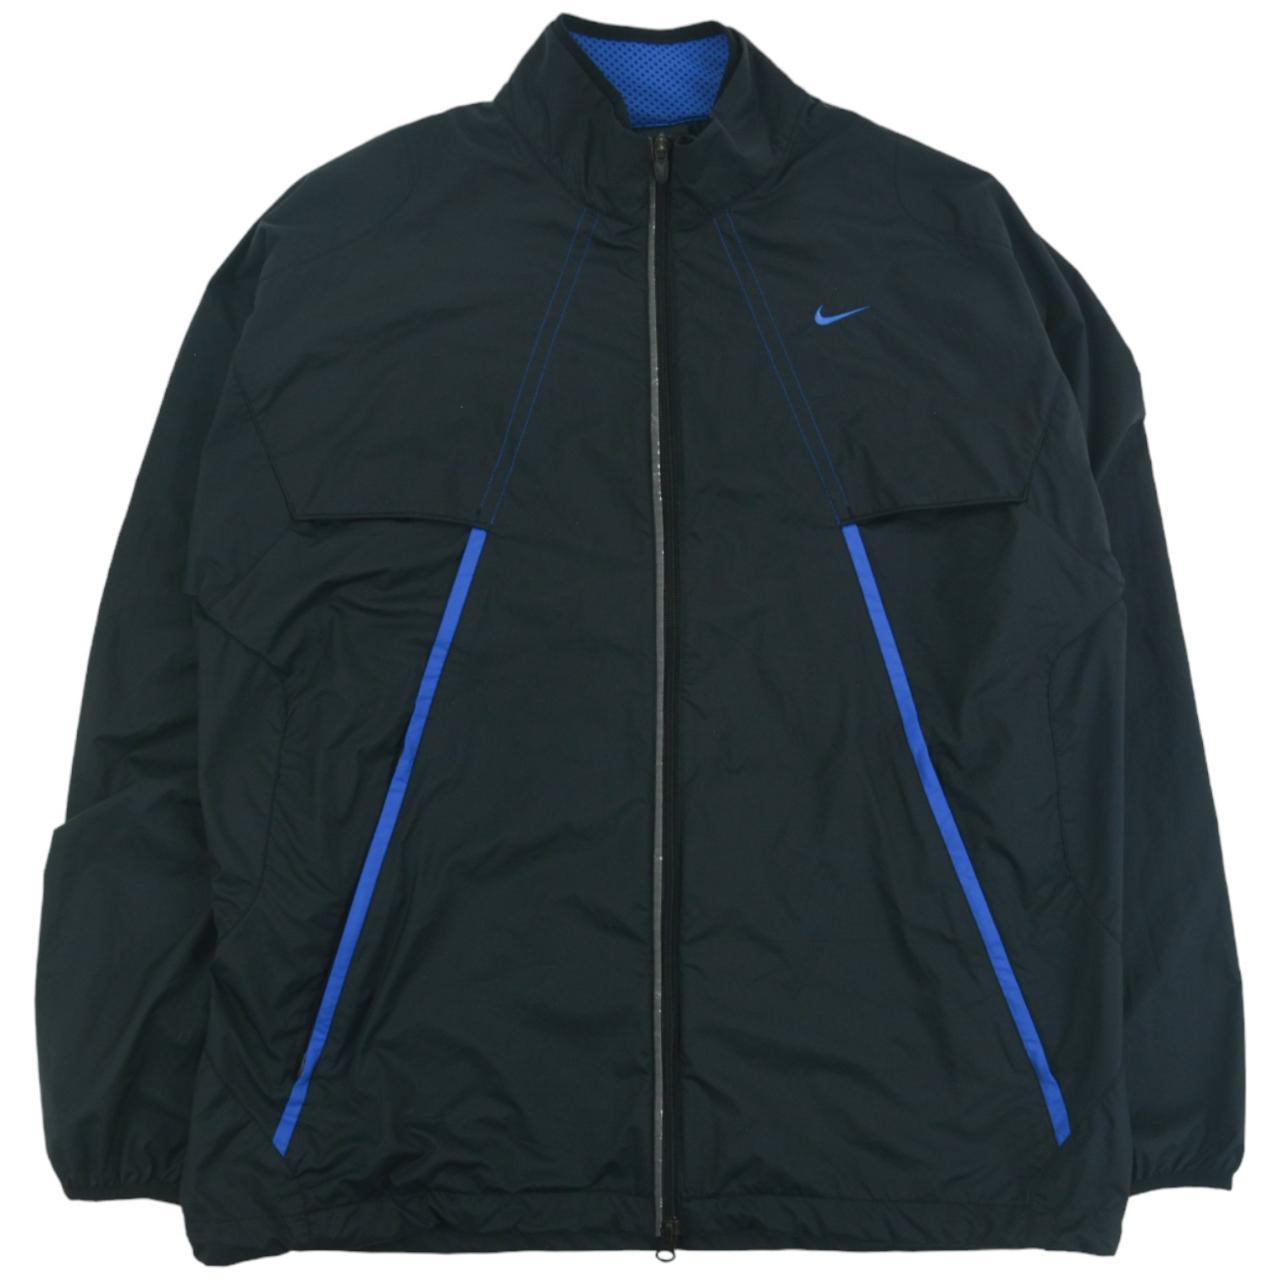 Vintage Nike Tracksuit Jacket Size L - Known Source